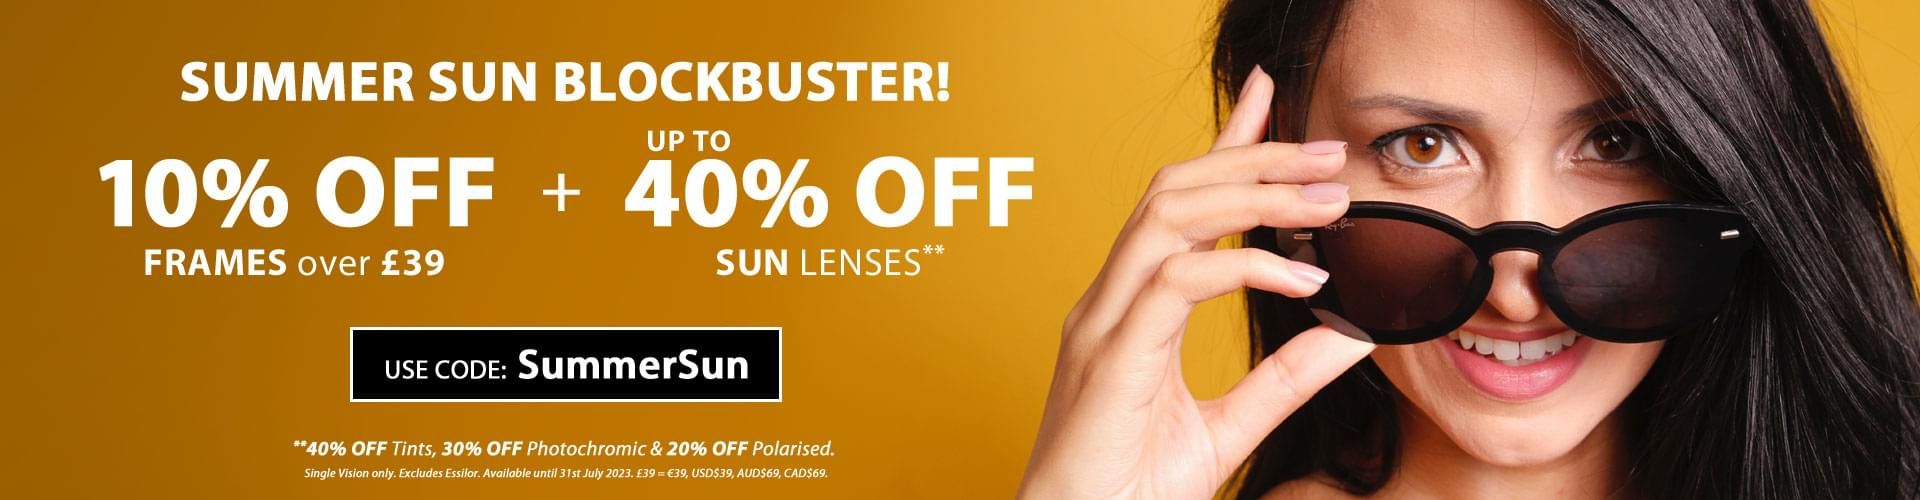 Summer Sun Blockbuster! - 10% OFF Frames £39+ & Up to 40% OFF Sun Lenses